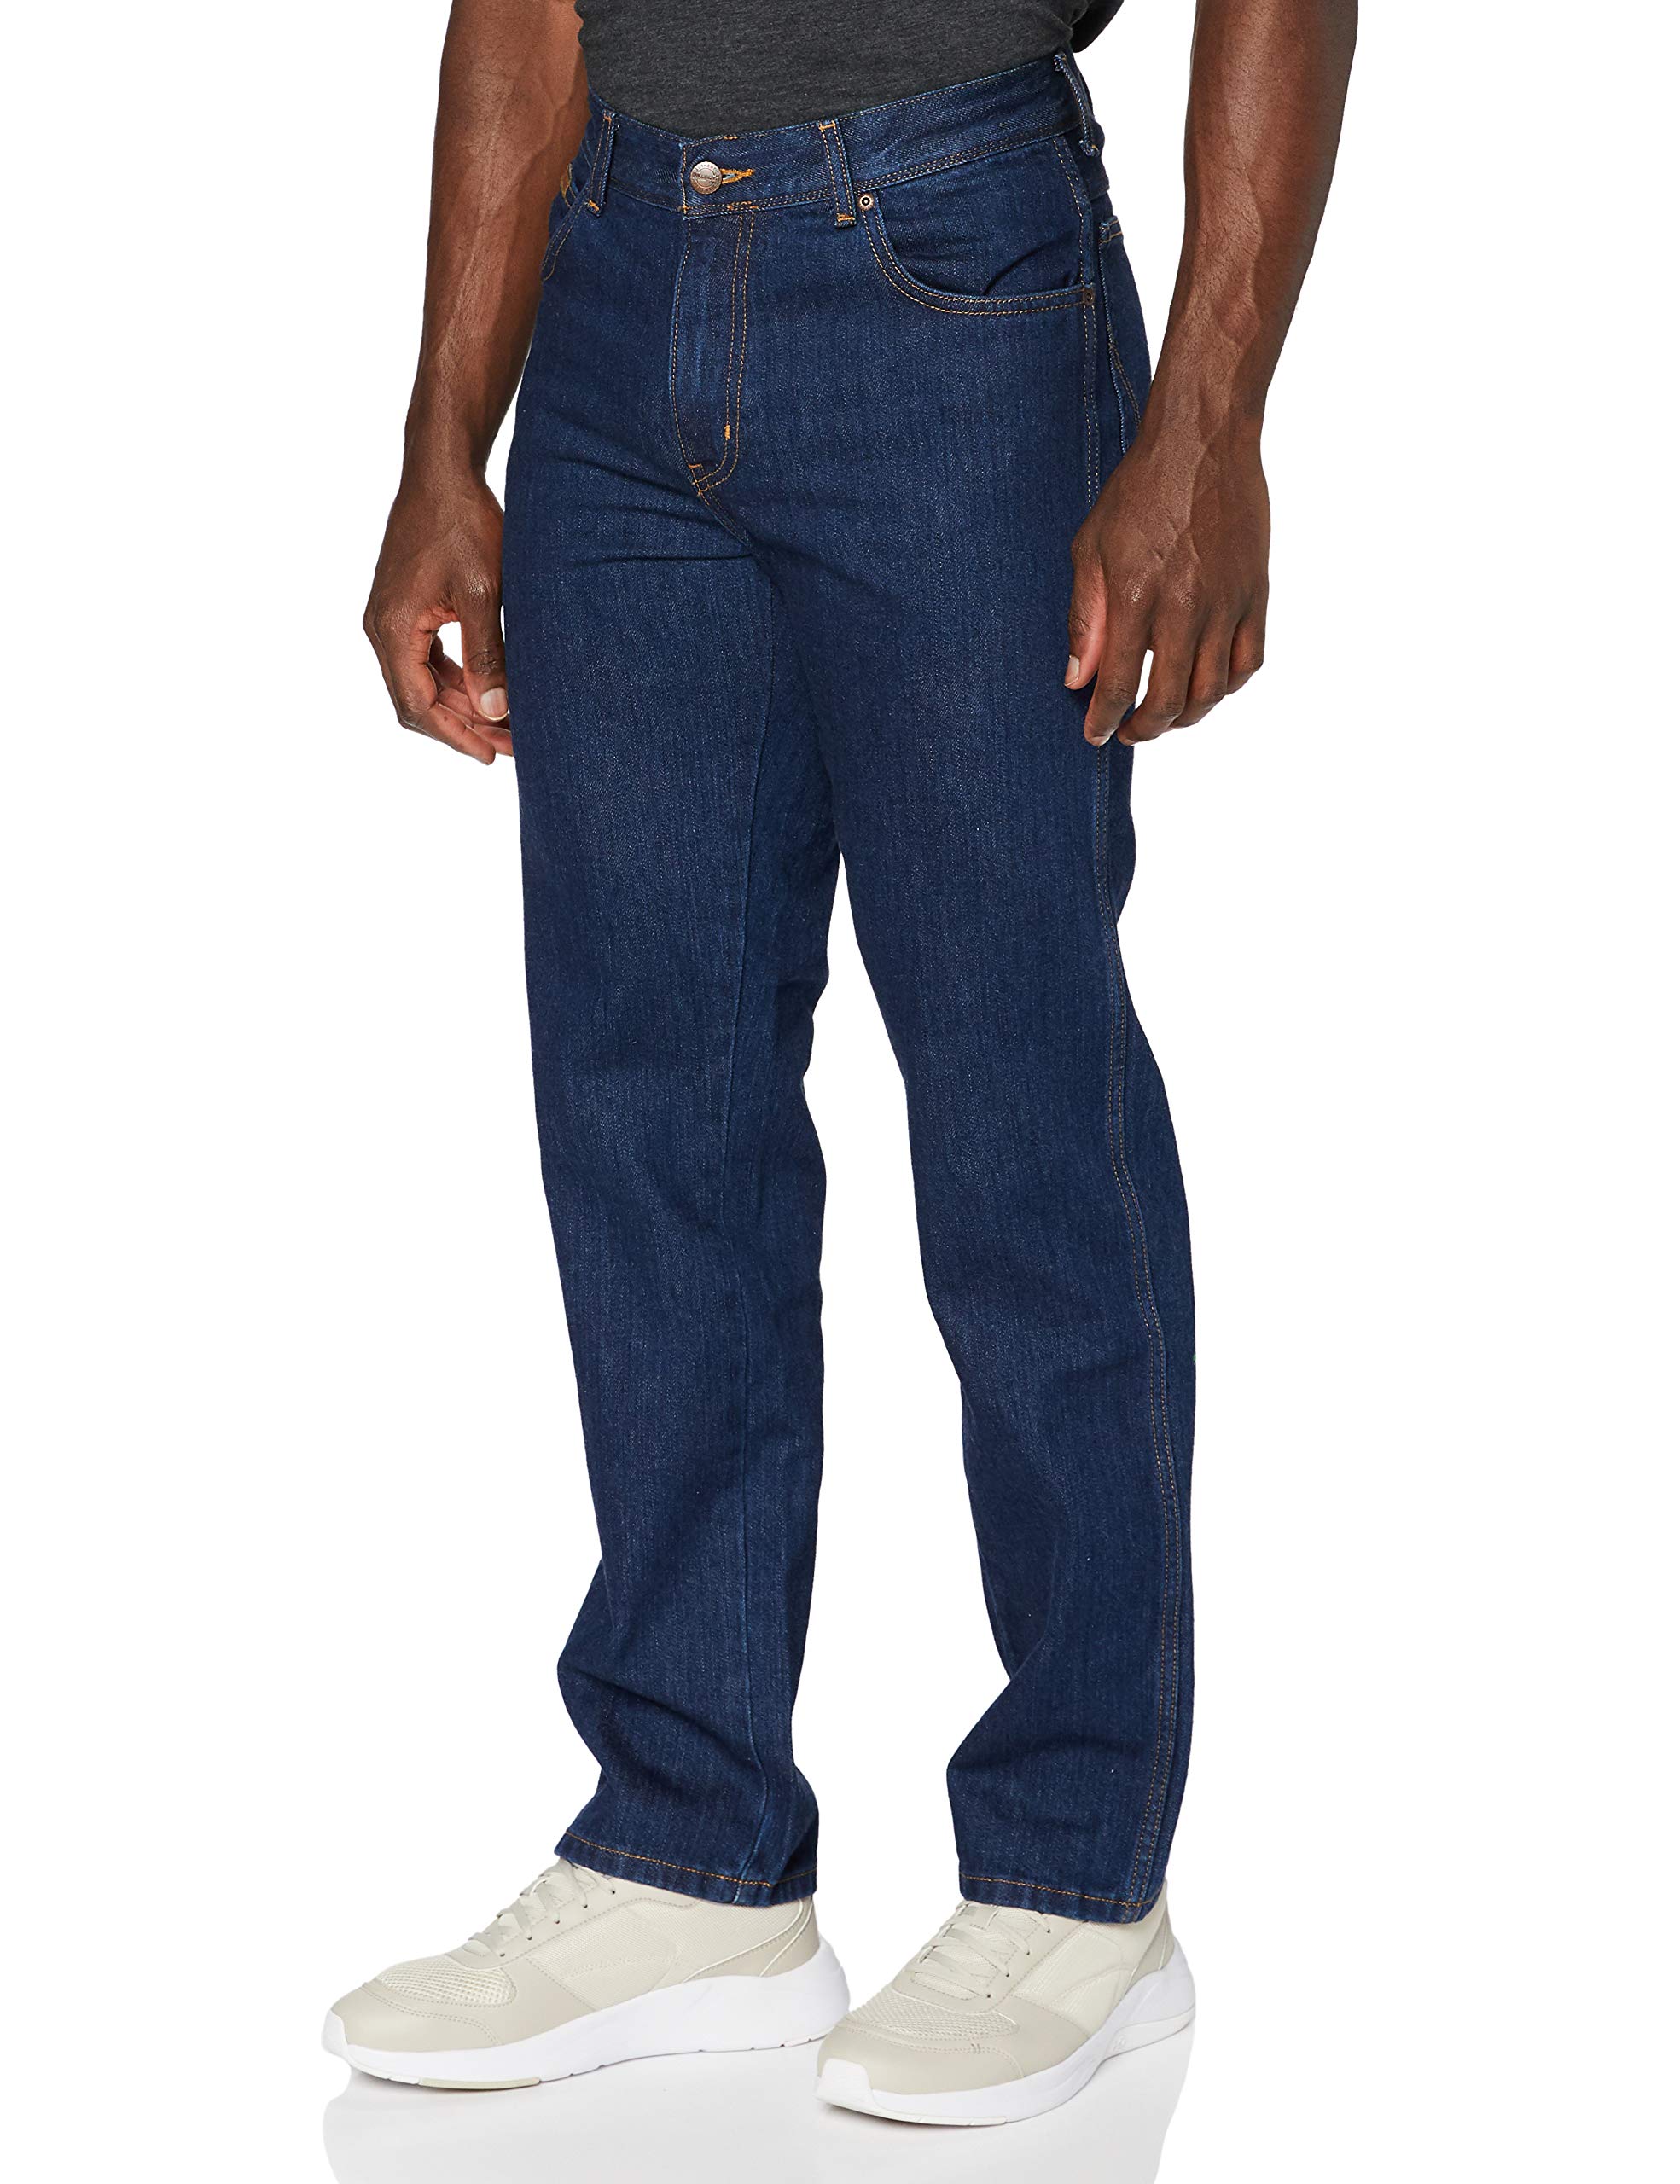 Wrangler Herren Texas 821 Authentic Straight Jeans, Darkstone, 38W / 36L